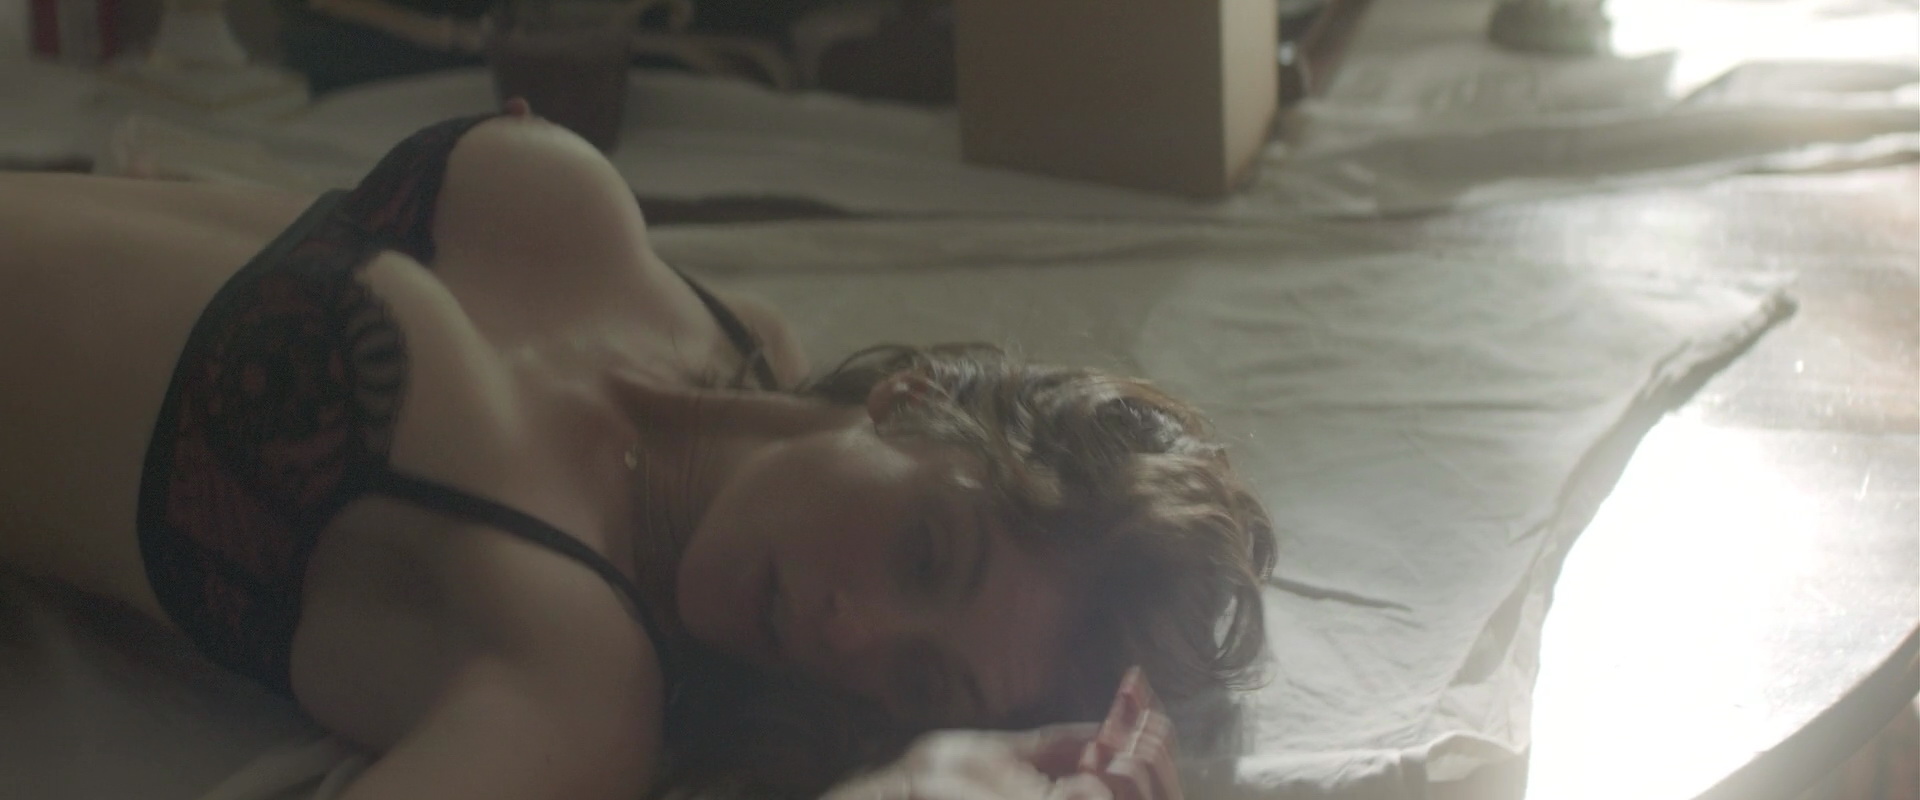 These Gemma Arterton Nudes Are Just Delicious 57 Pics